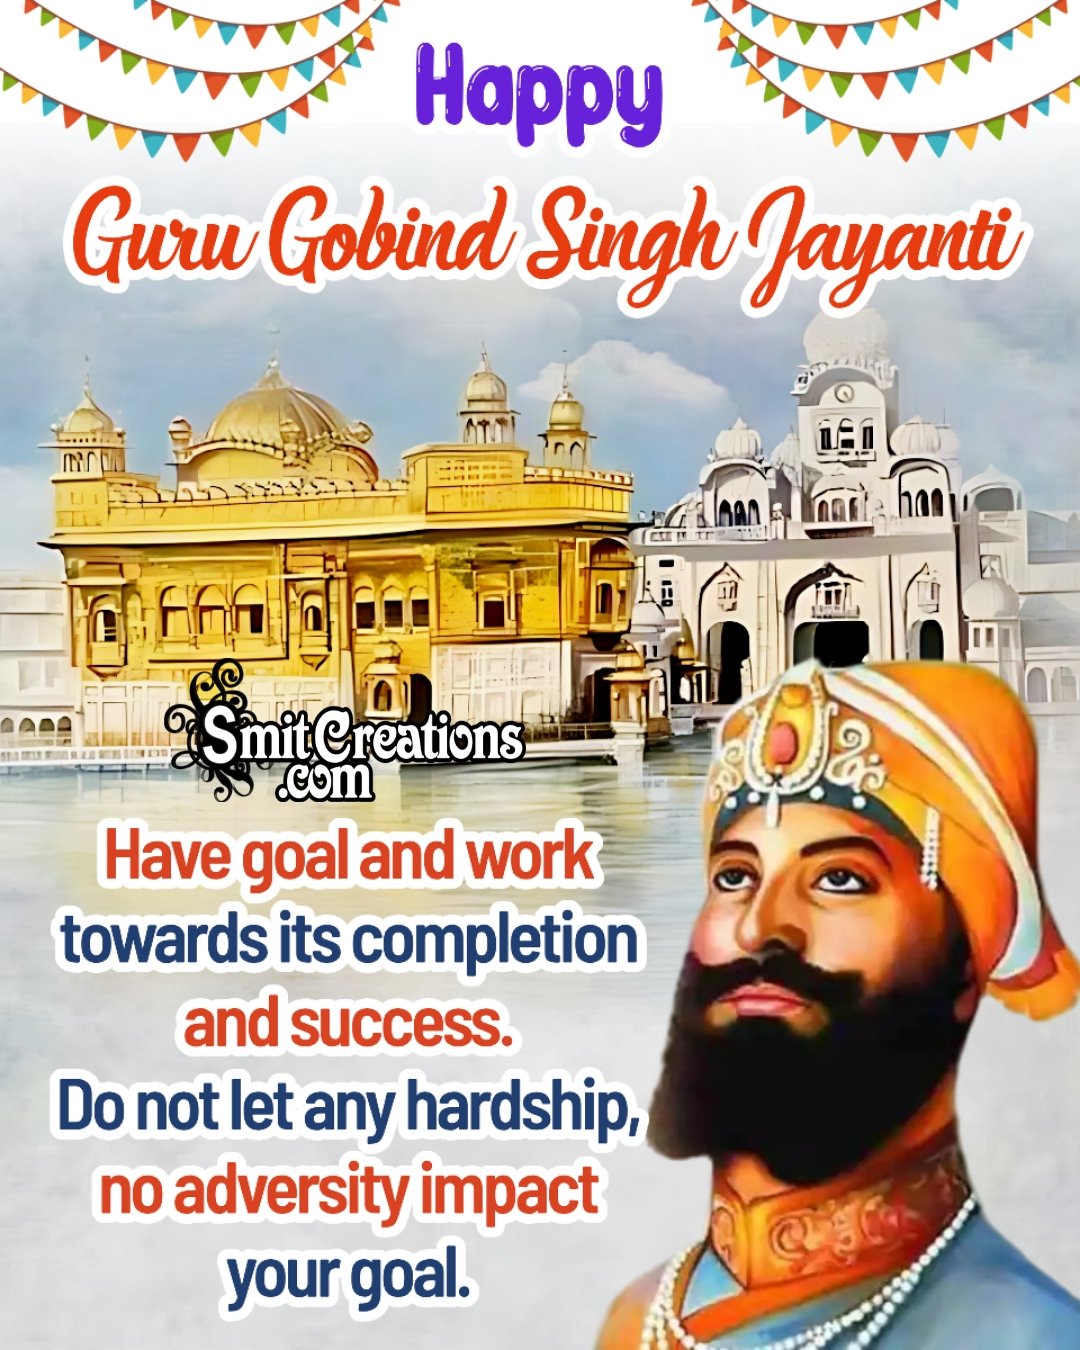 Guru Gobind Singh Jayanti Wishes